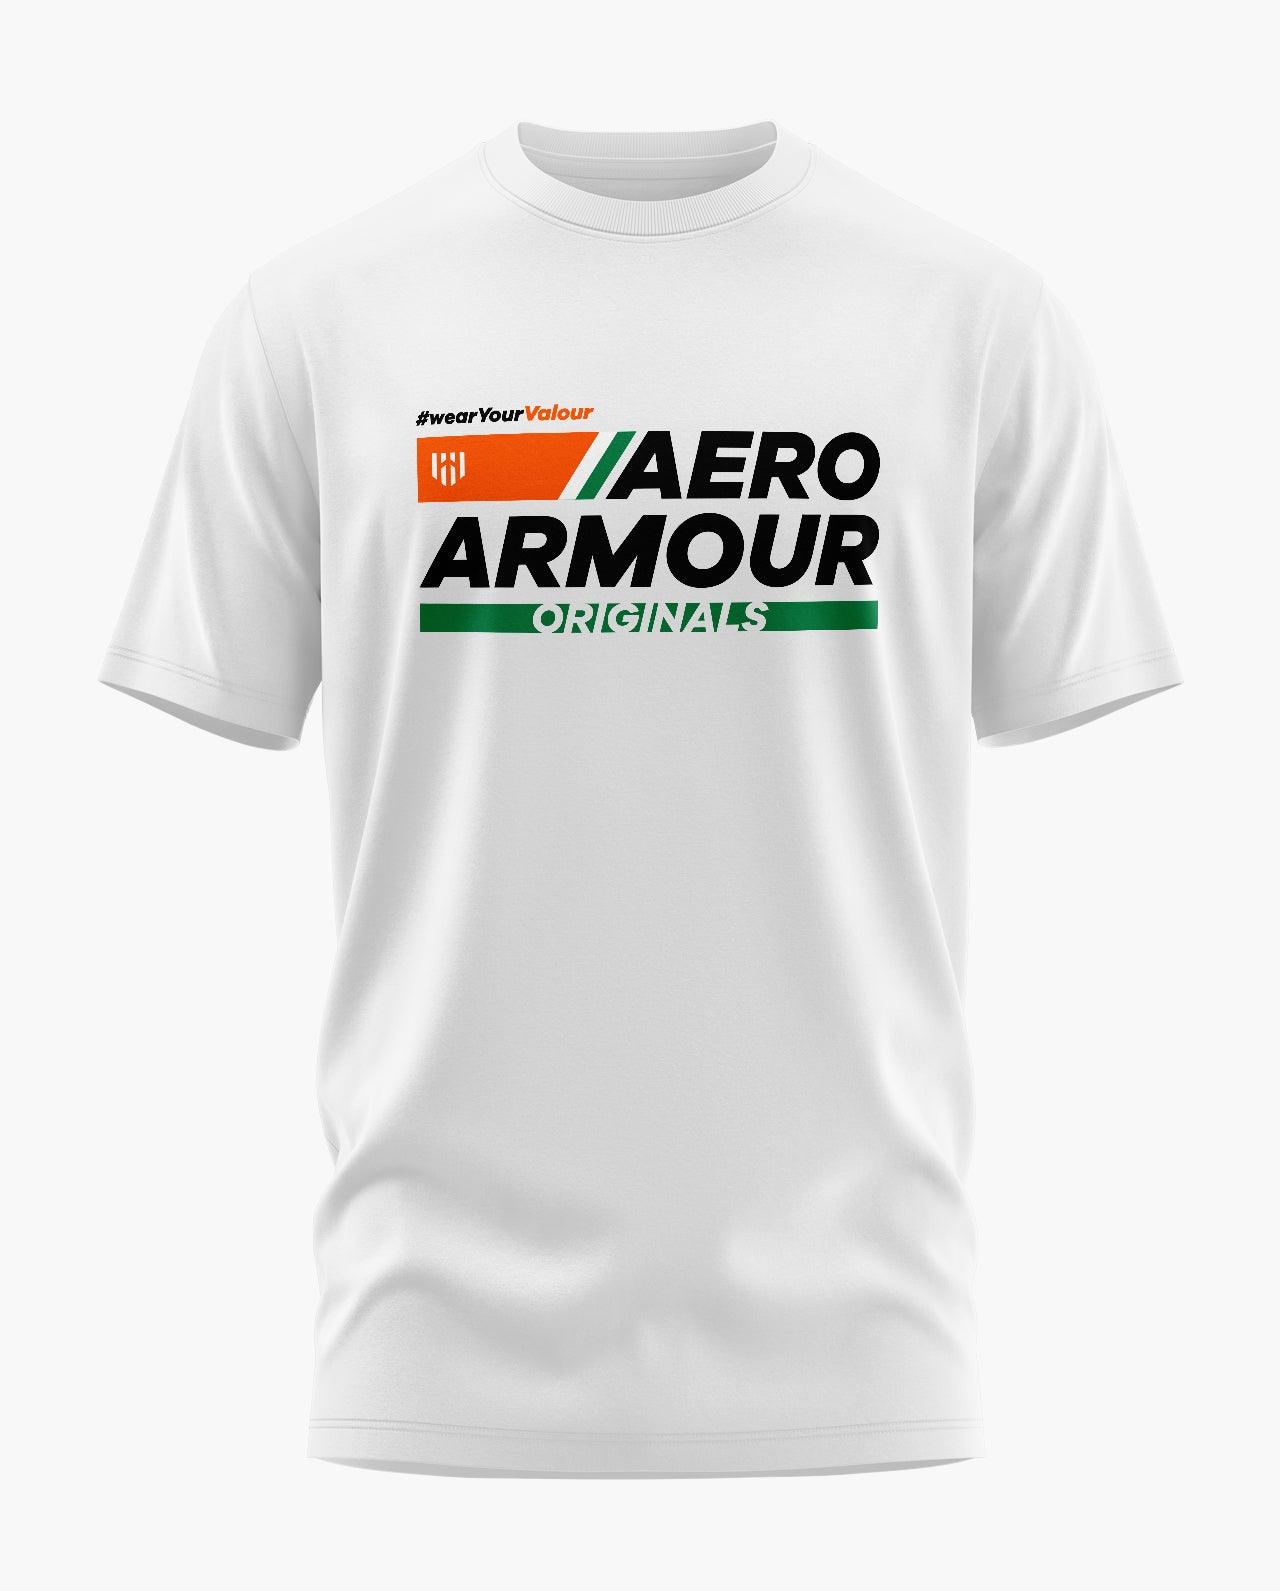 Aero Armour Originals Bharat Edition T-Shirt - Aero Armour